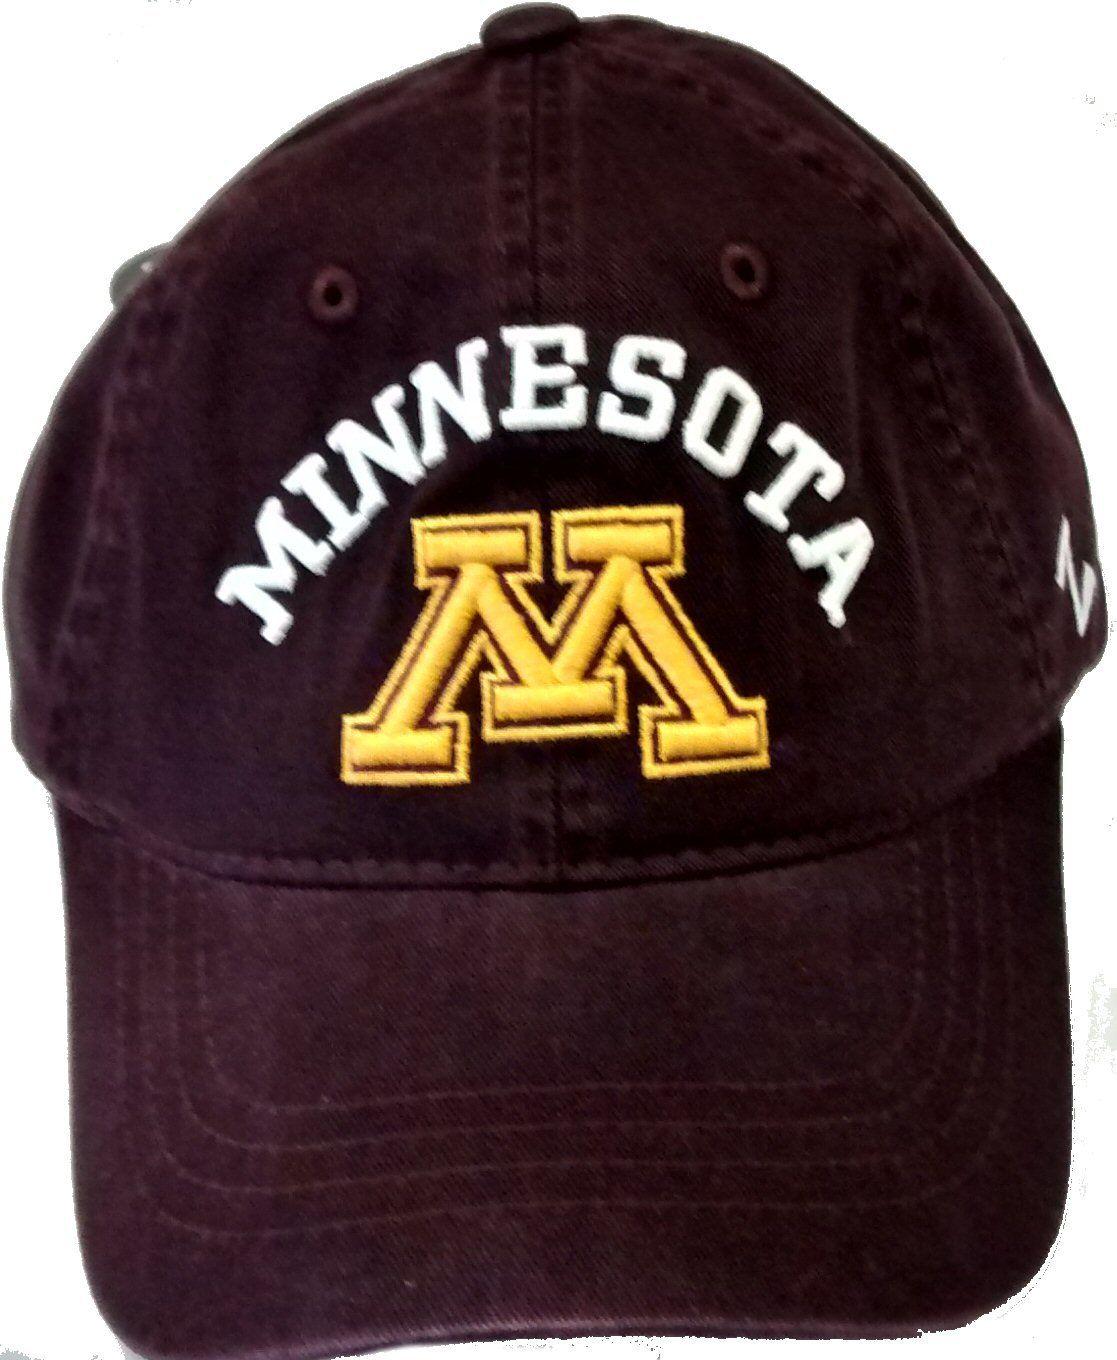 Minnesota M Logo - Amazon.com : Men's Centerpiece M Logo Minnesota Gophers Hat